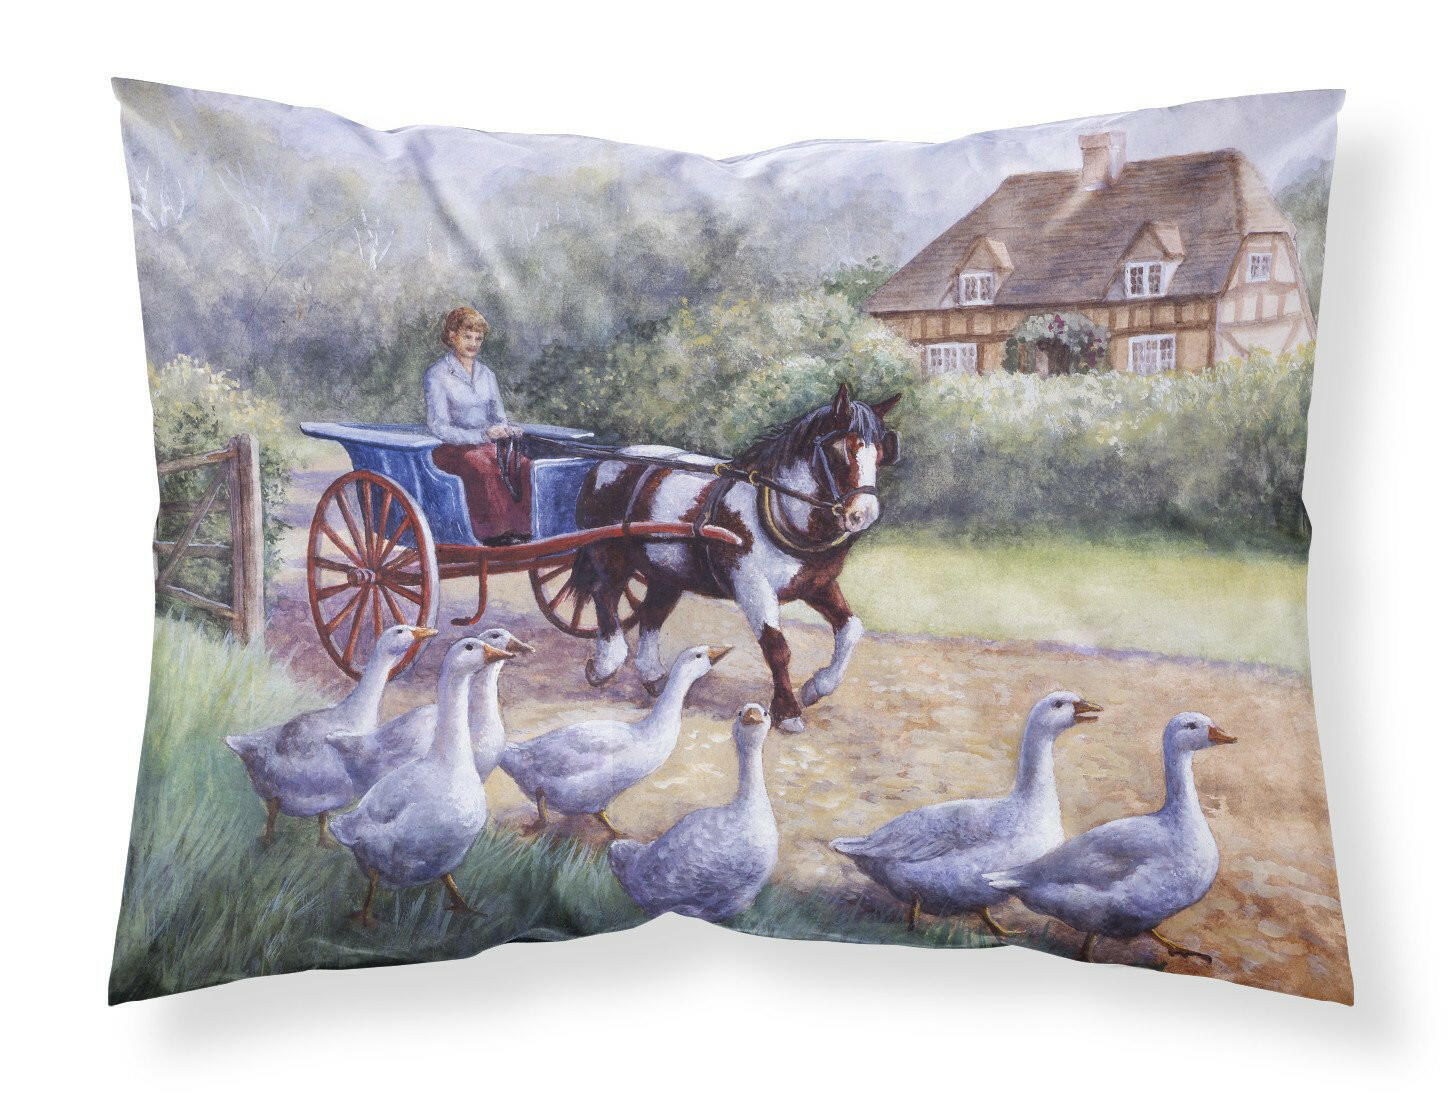 Geese Crossing before the Horse Fabric Standard Pillowcase BDBA0351PILLOWCASE by Caroline's Treasures